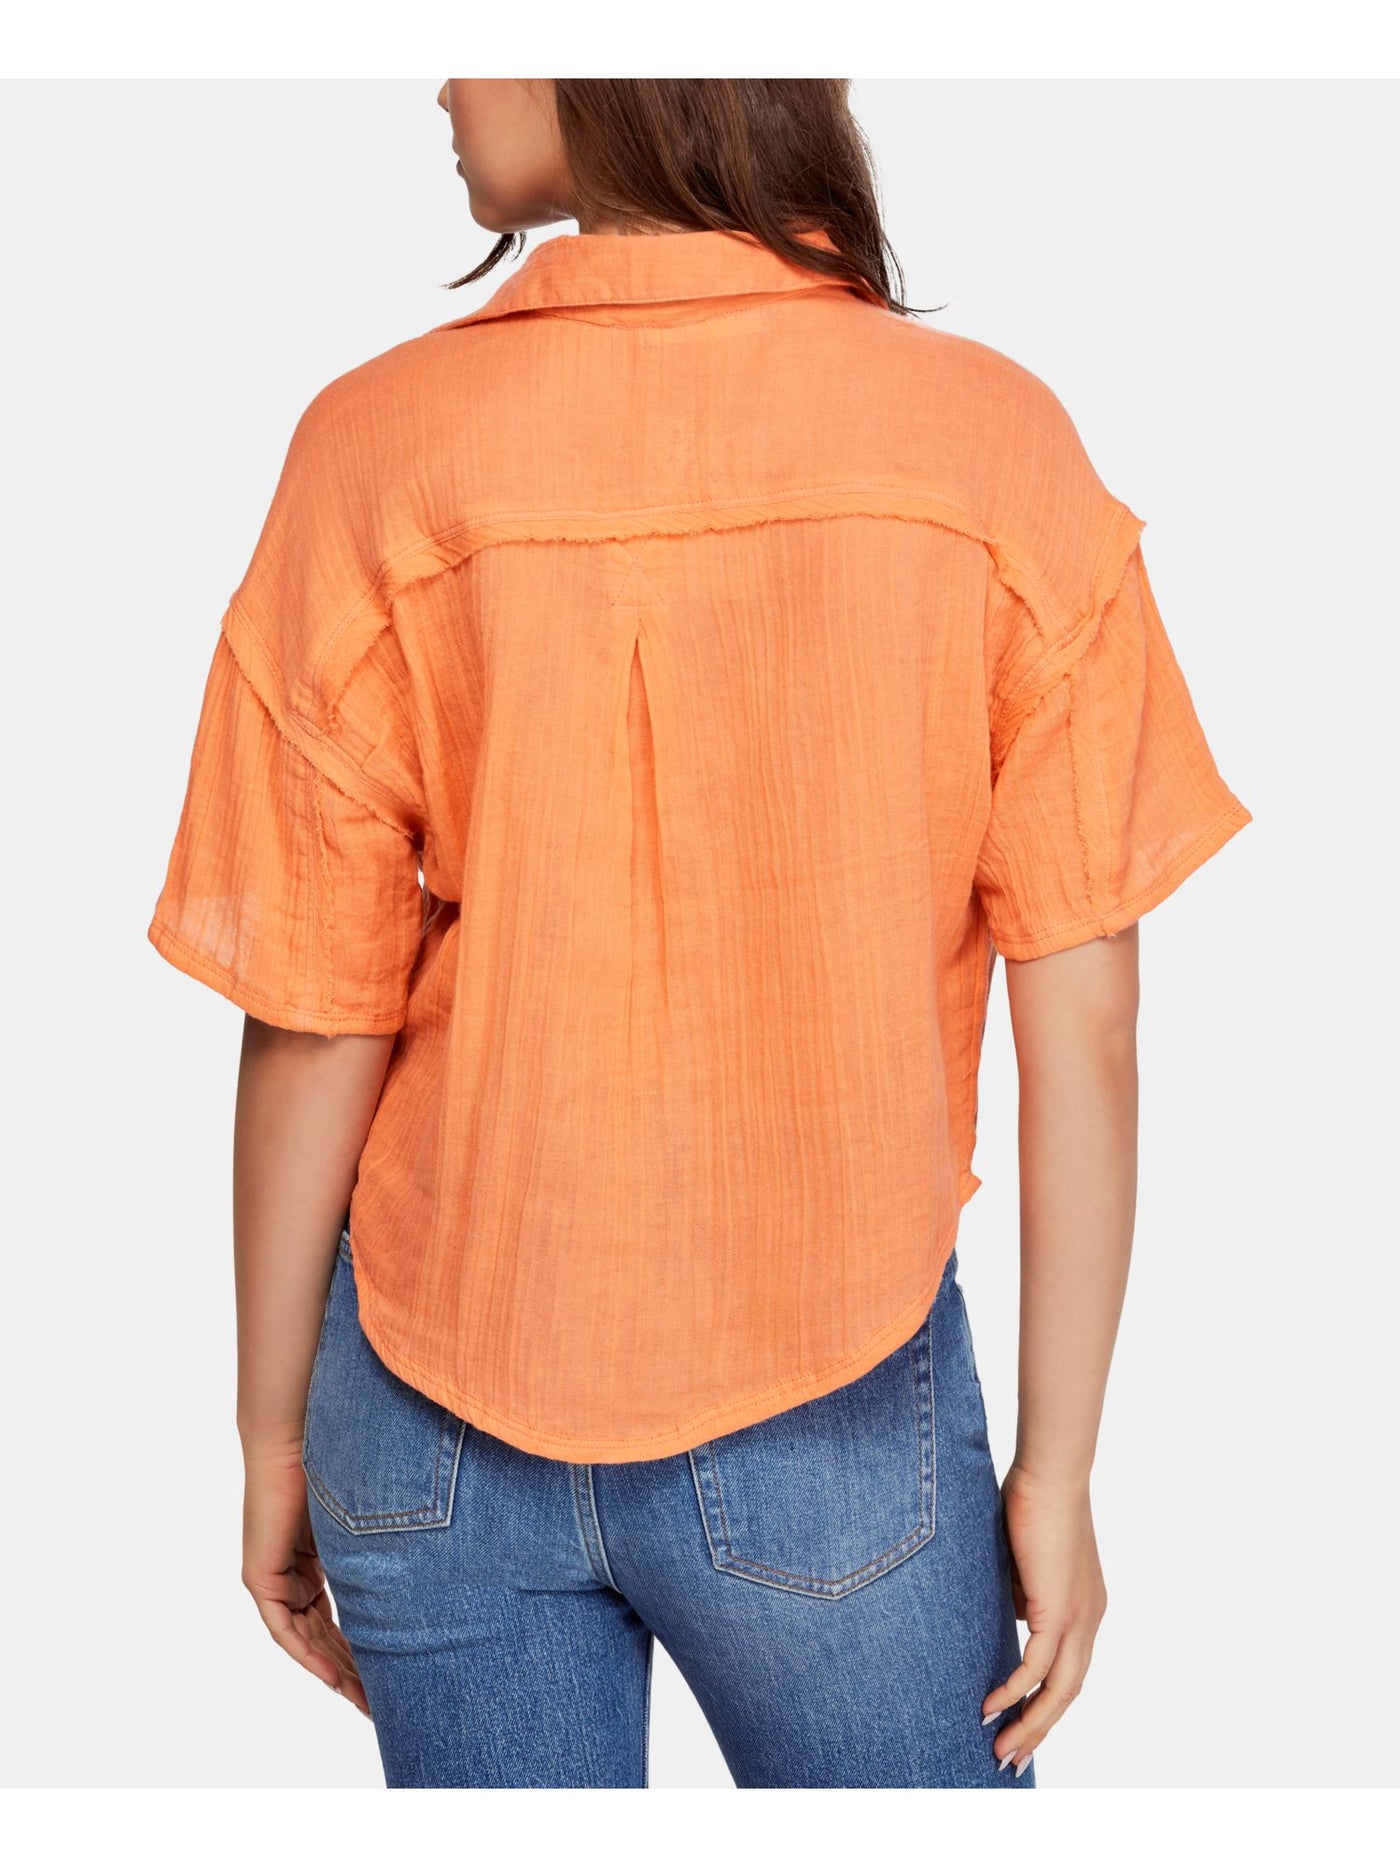 WE THE FREE Womens Orange Short Sleeve V Neck Top Size: XS